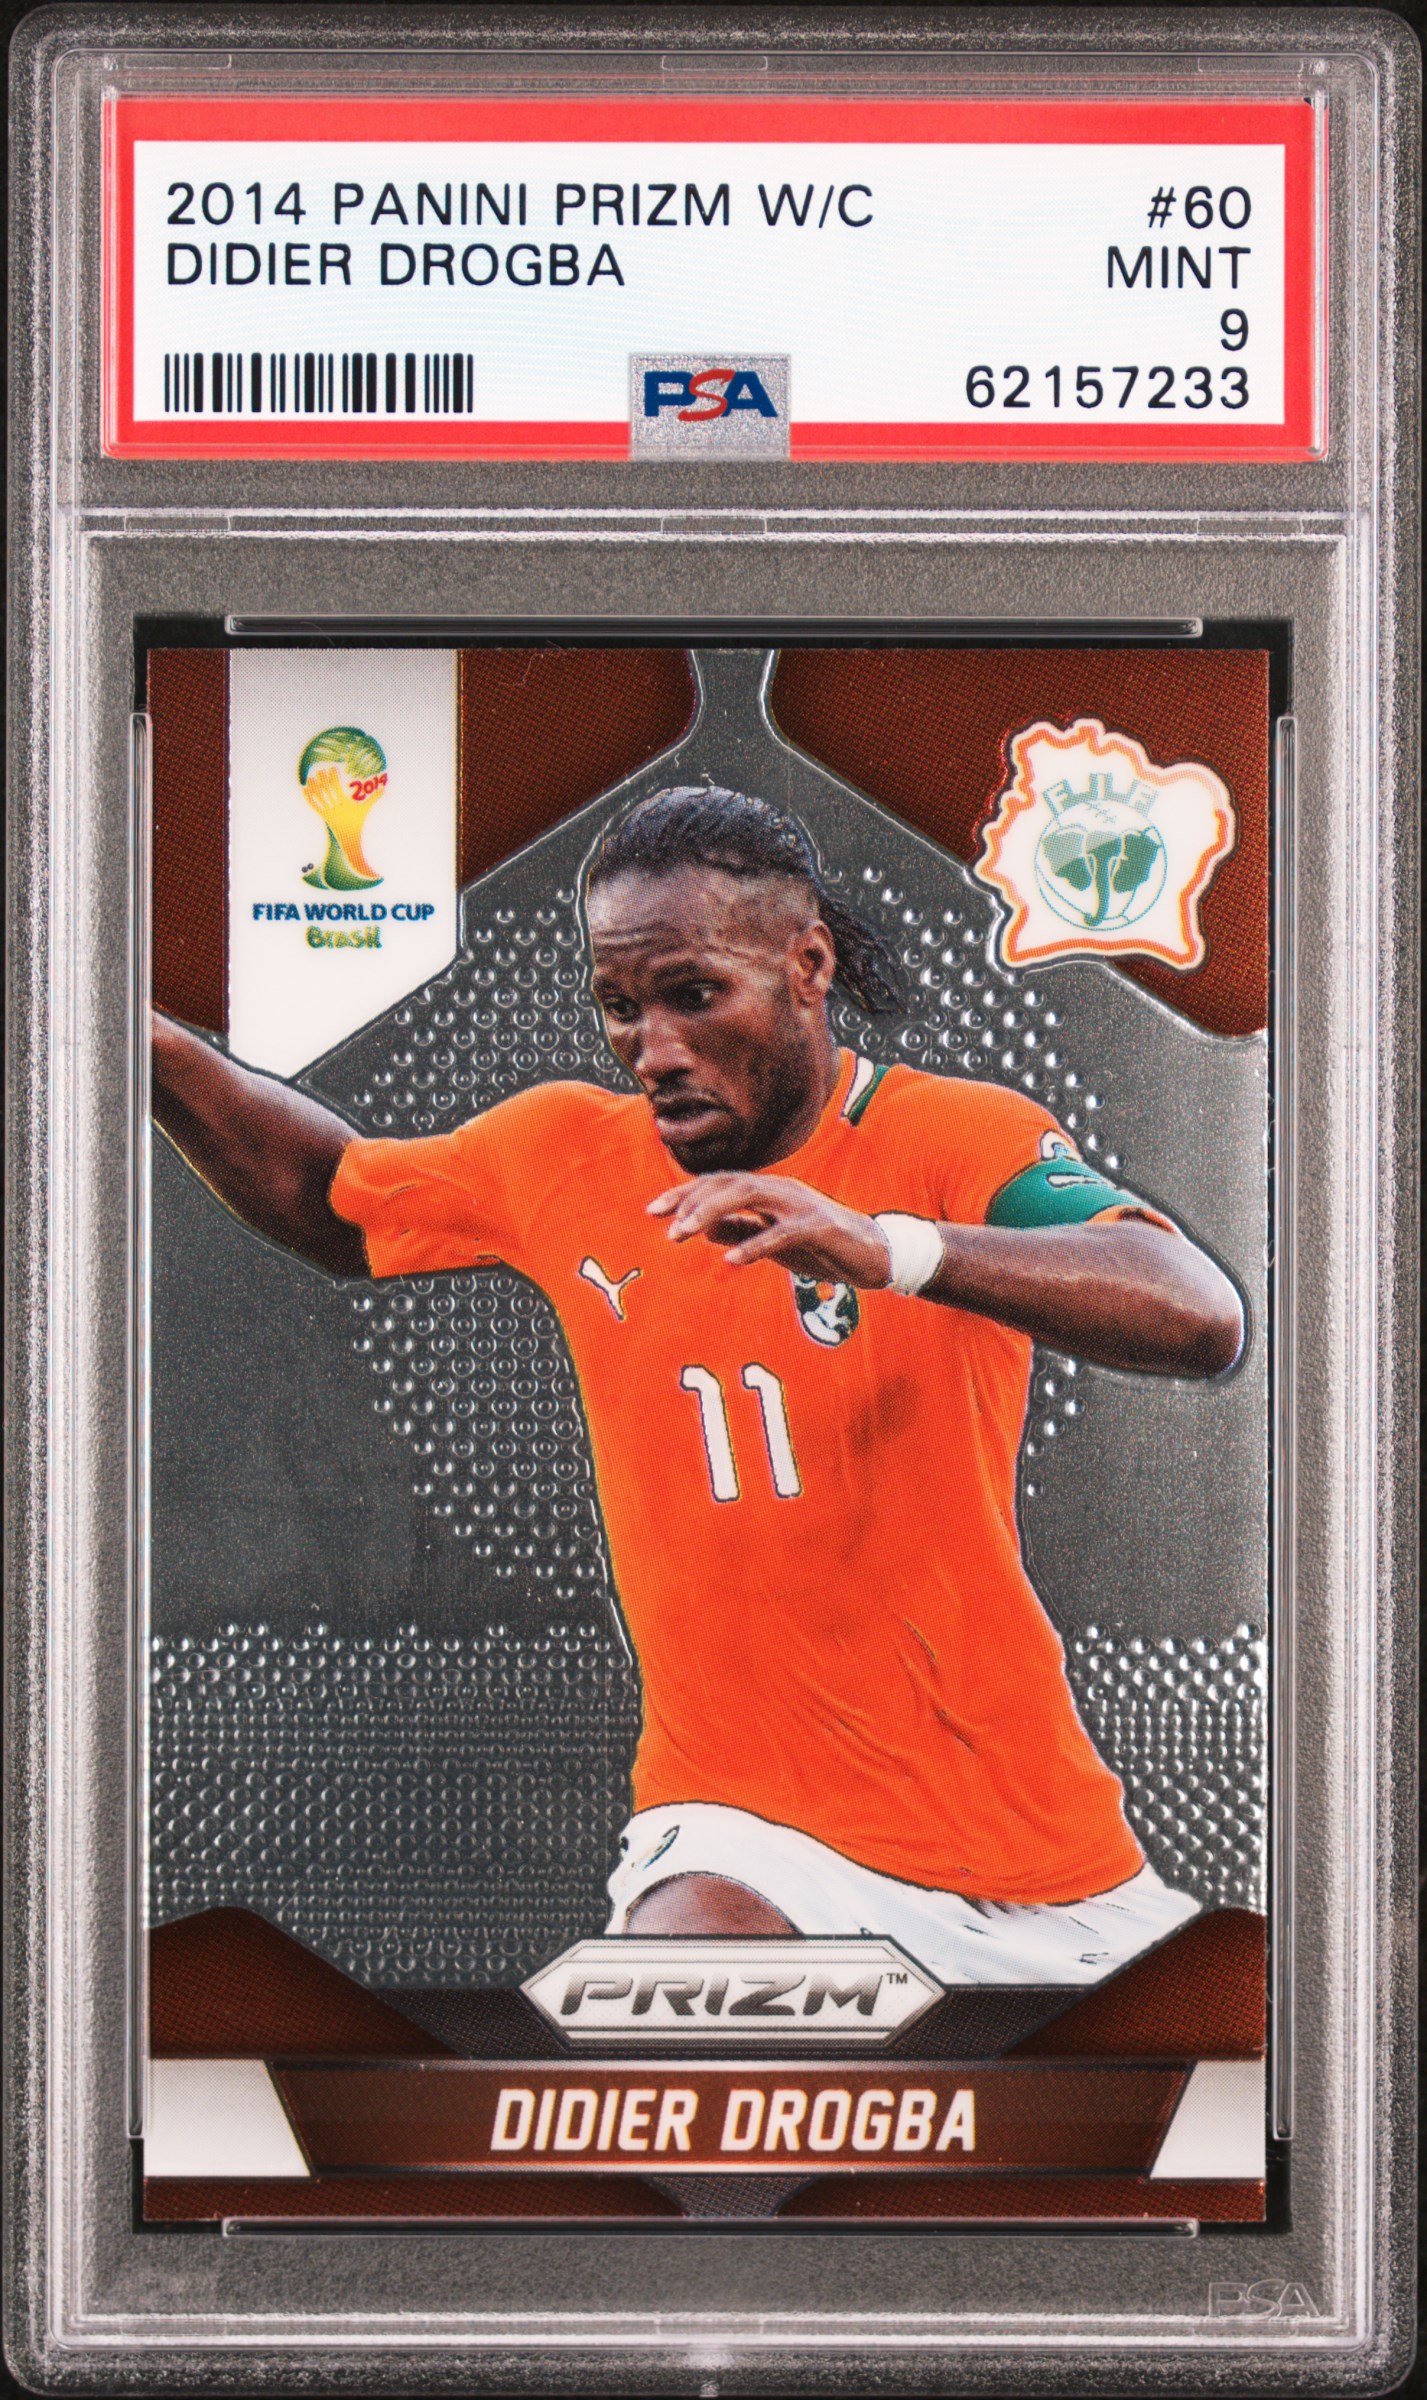 2014 Panini Prizm World Cup #60 Didier Drogba – PSA MINT 9